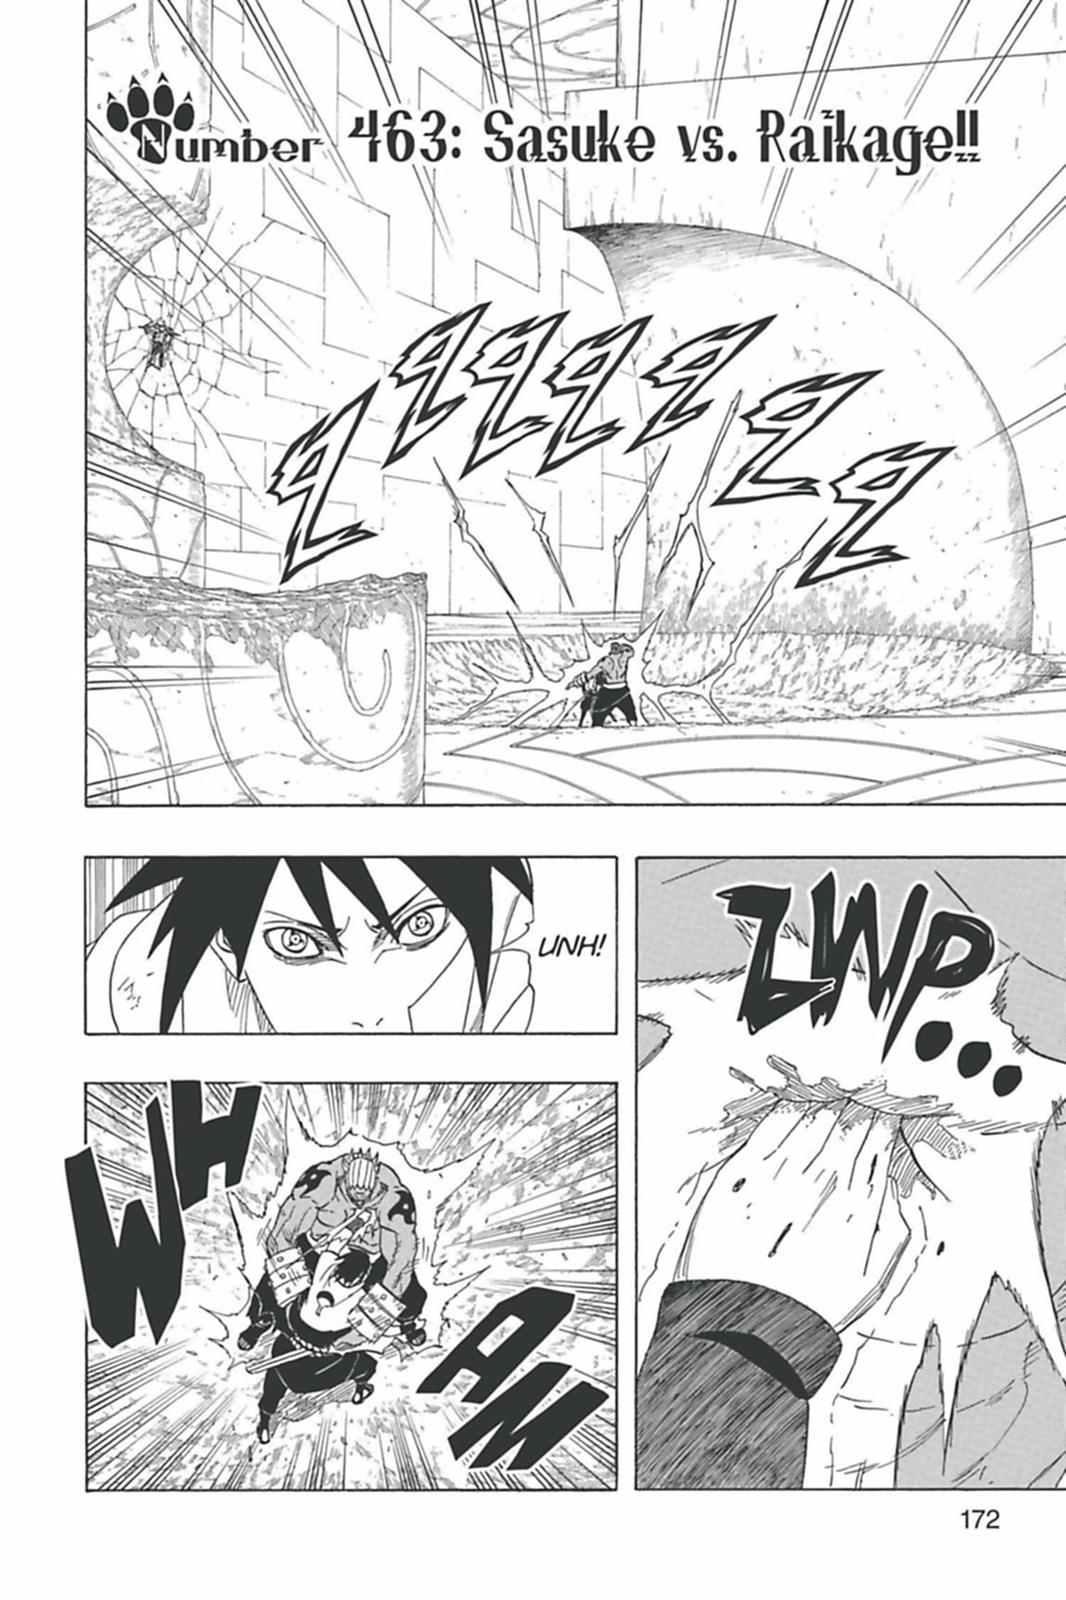 Hashirama Senju vs Sasuke Uchiha - Página 6 0463-002